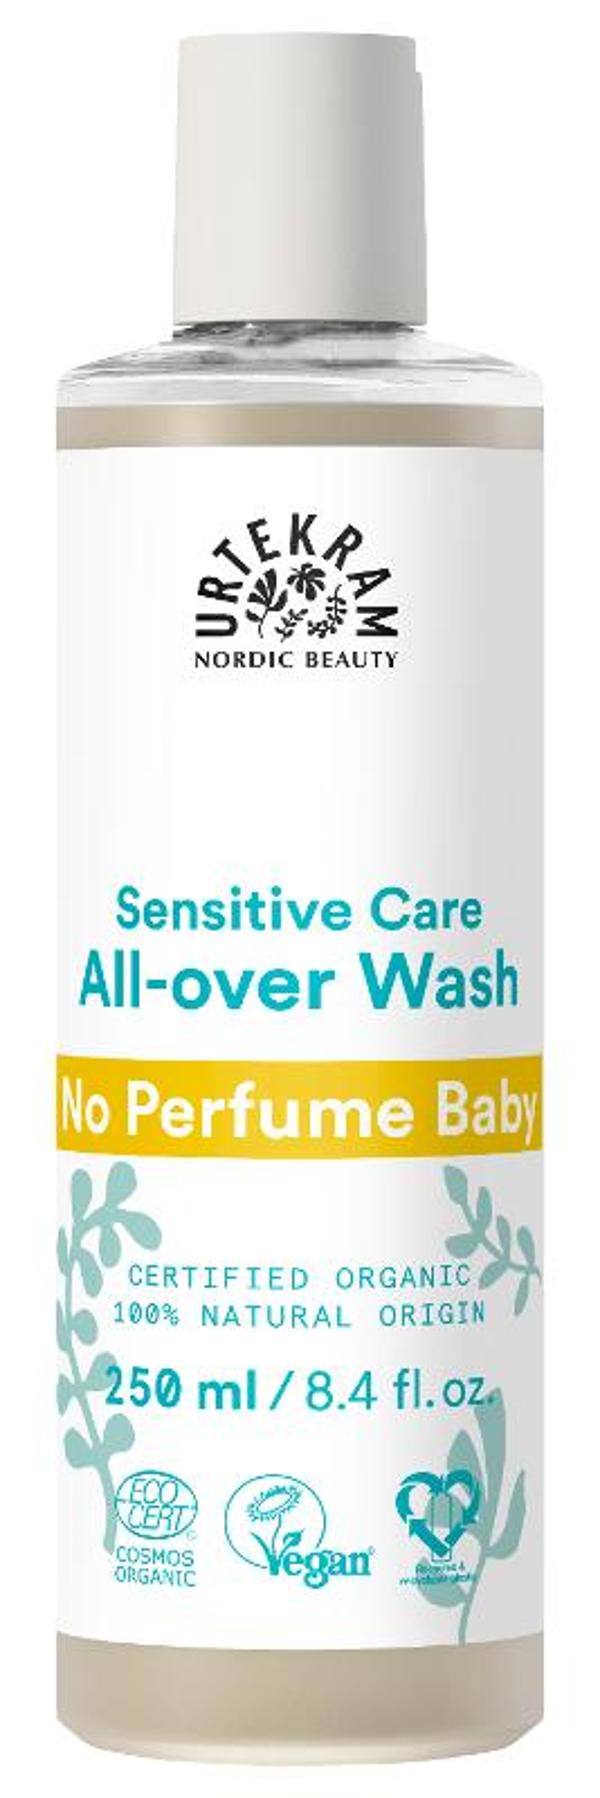 Produktfoto zu No Perfume Baby Haut & Haar 250ml